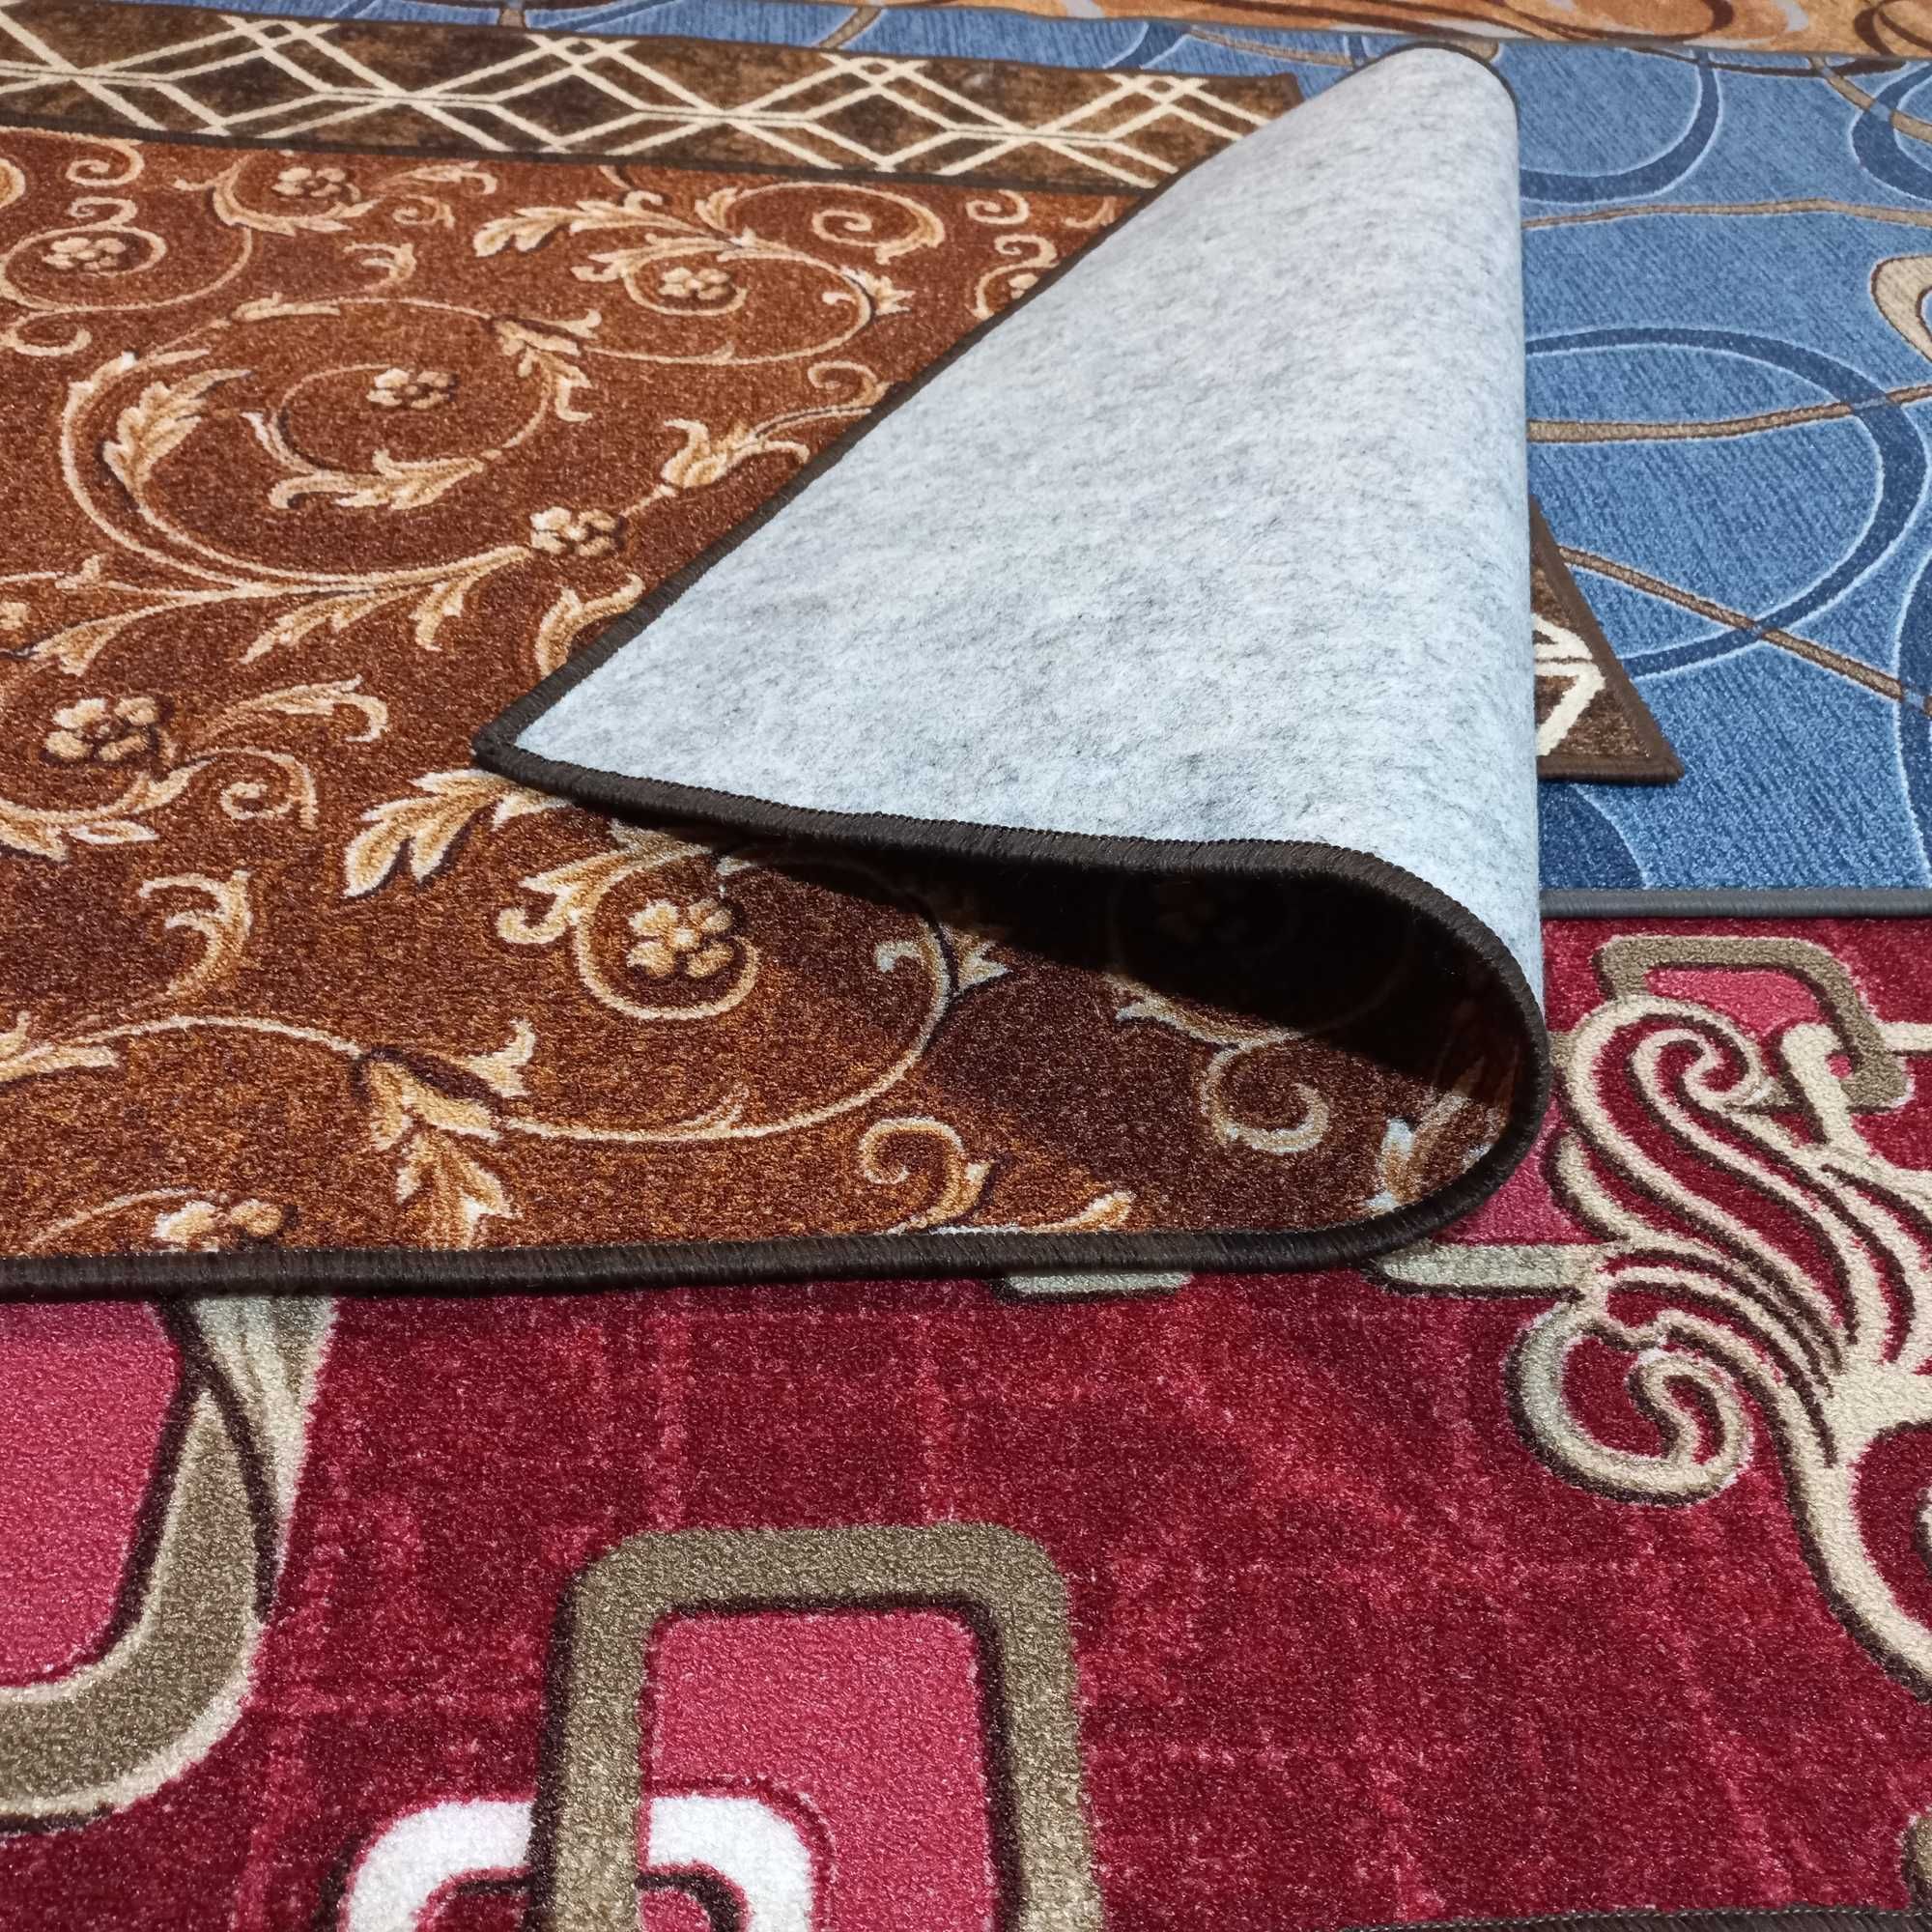 Розпродаж складу ковер килим килимок коврик Асортимент